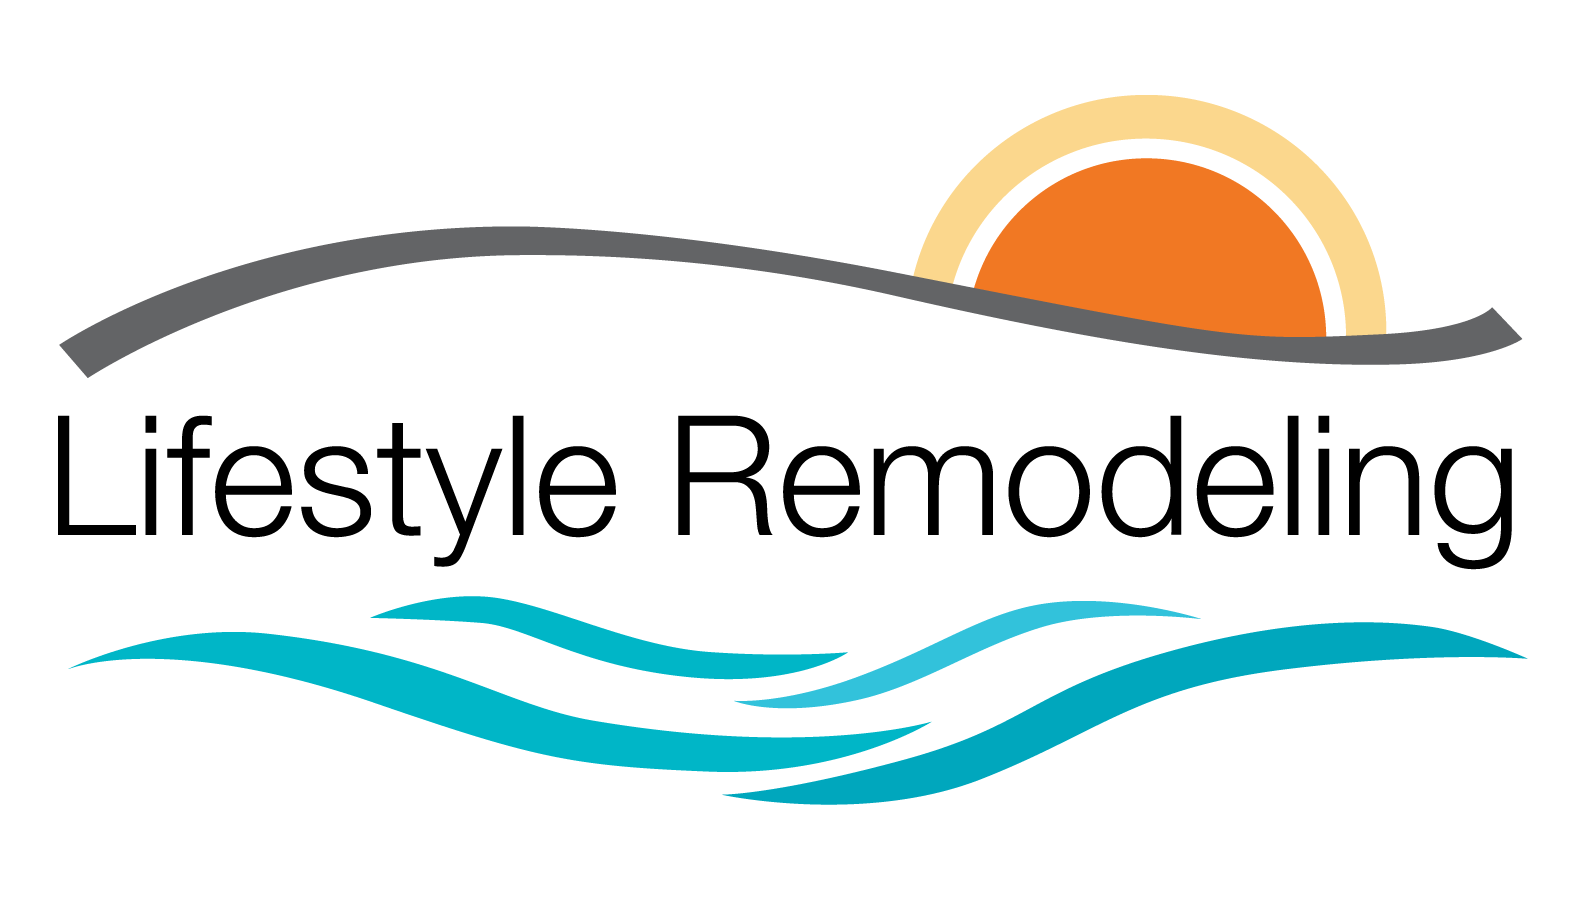 Lifestyle Remodeling Logo